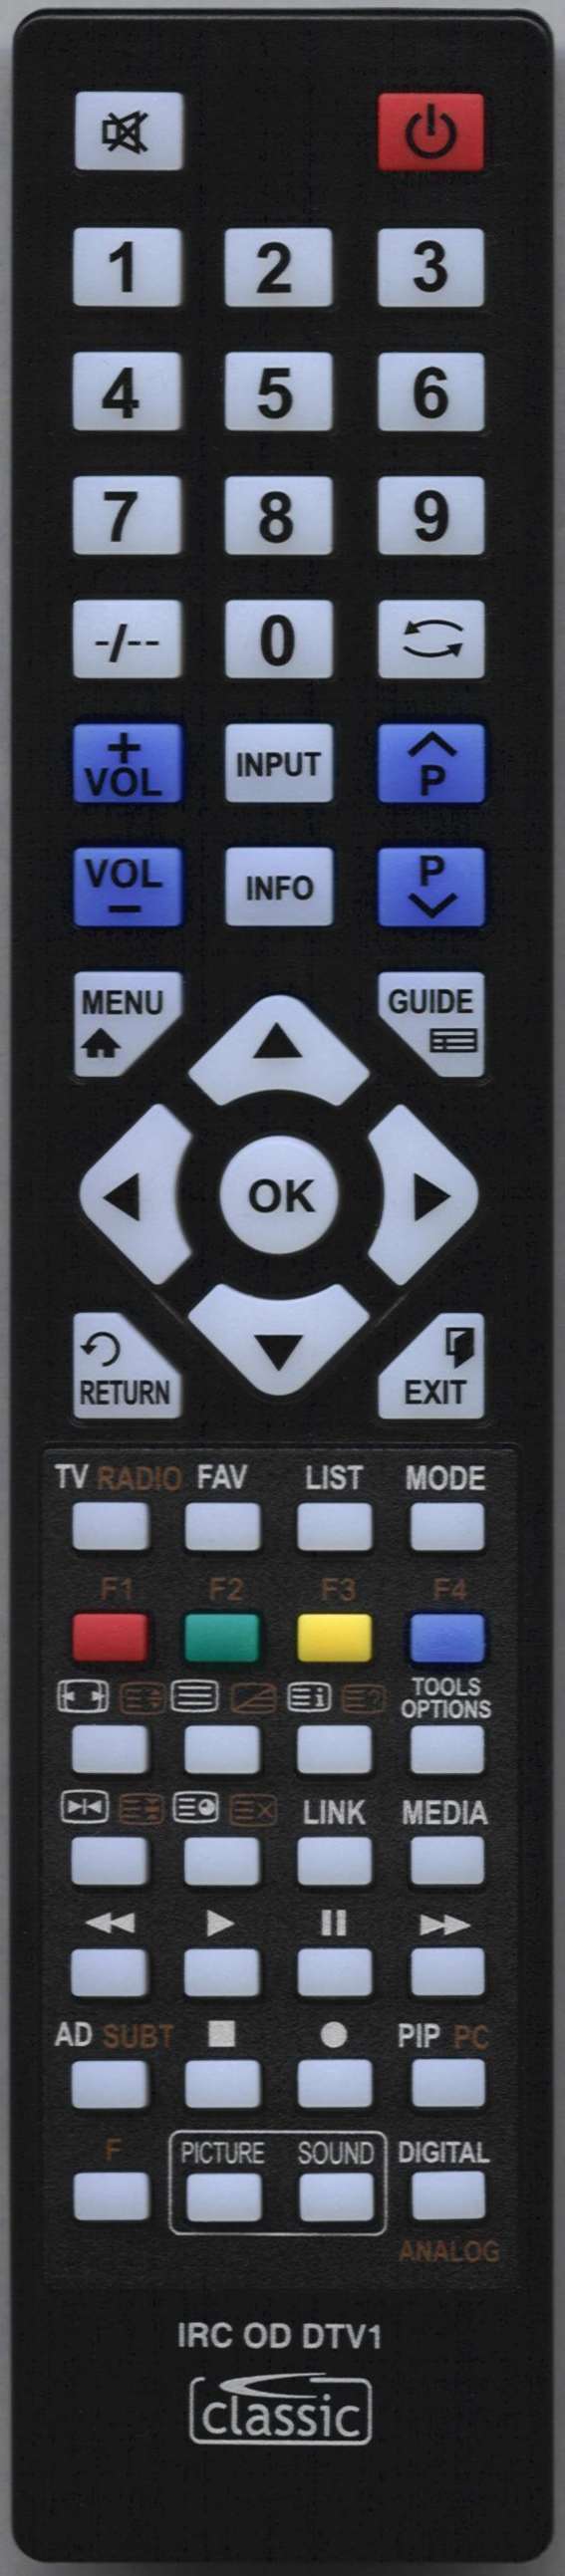 SONY KDL26EX320B Remote Control Alternative 